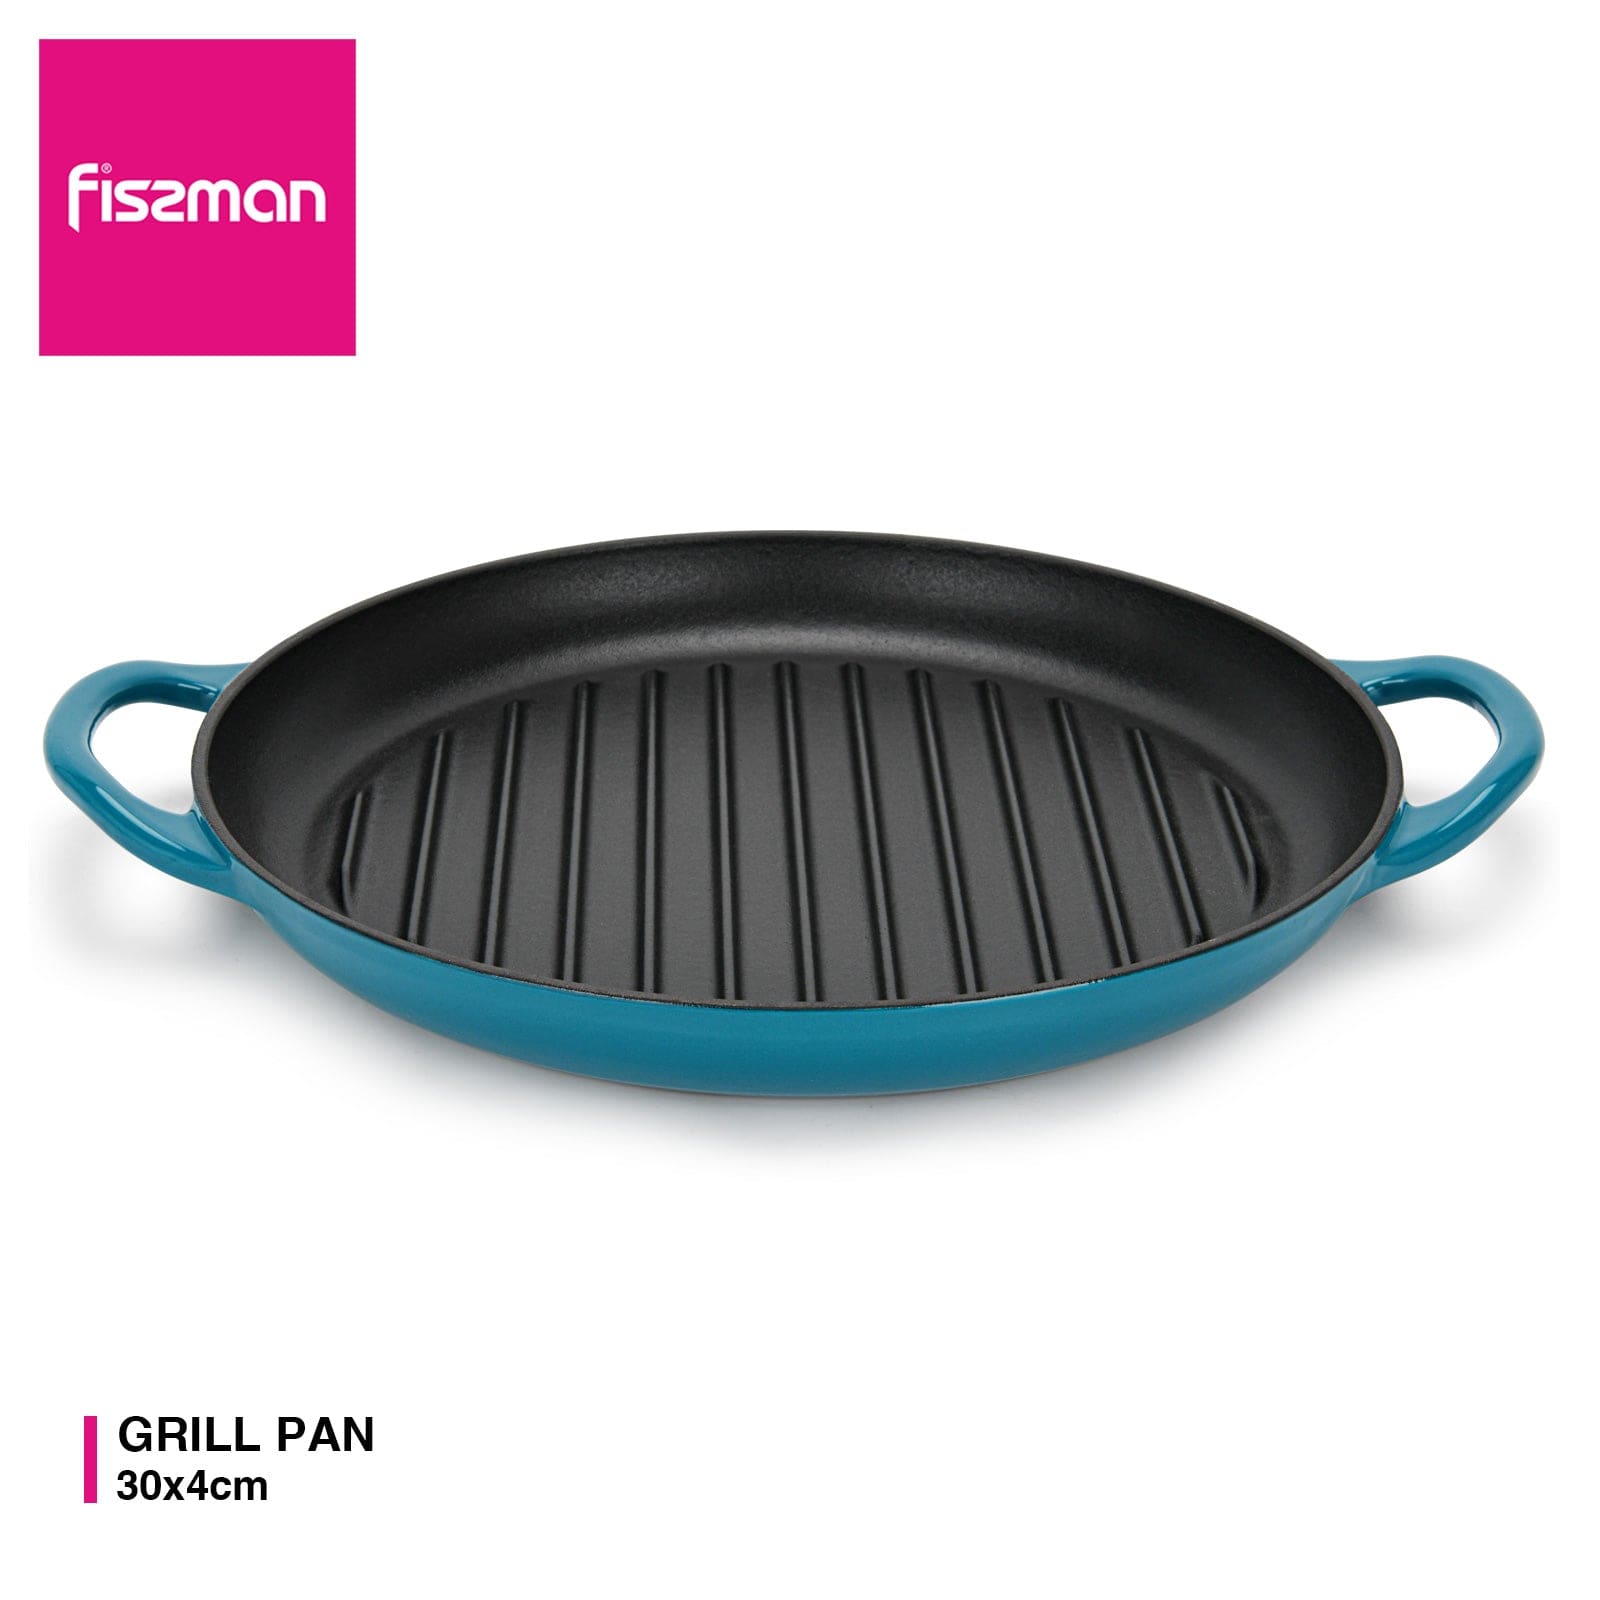 Fissman Grill Pan 30x4.0cm (Enamel Cast Iron)